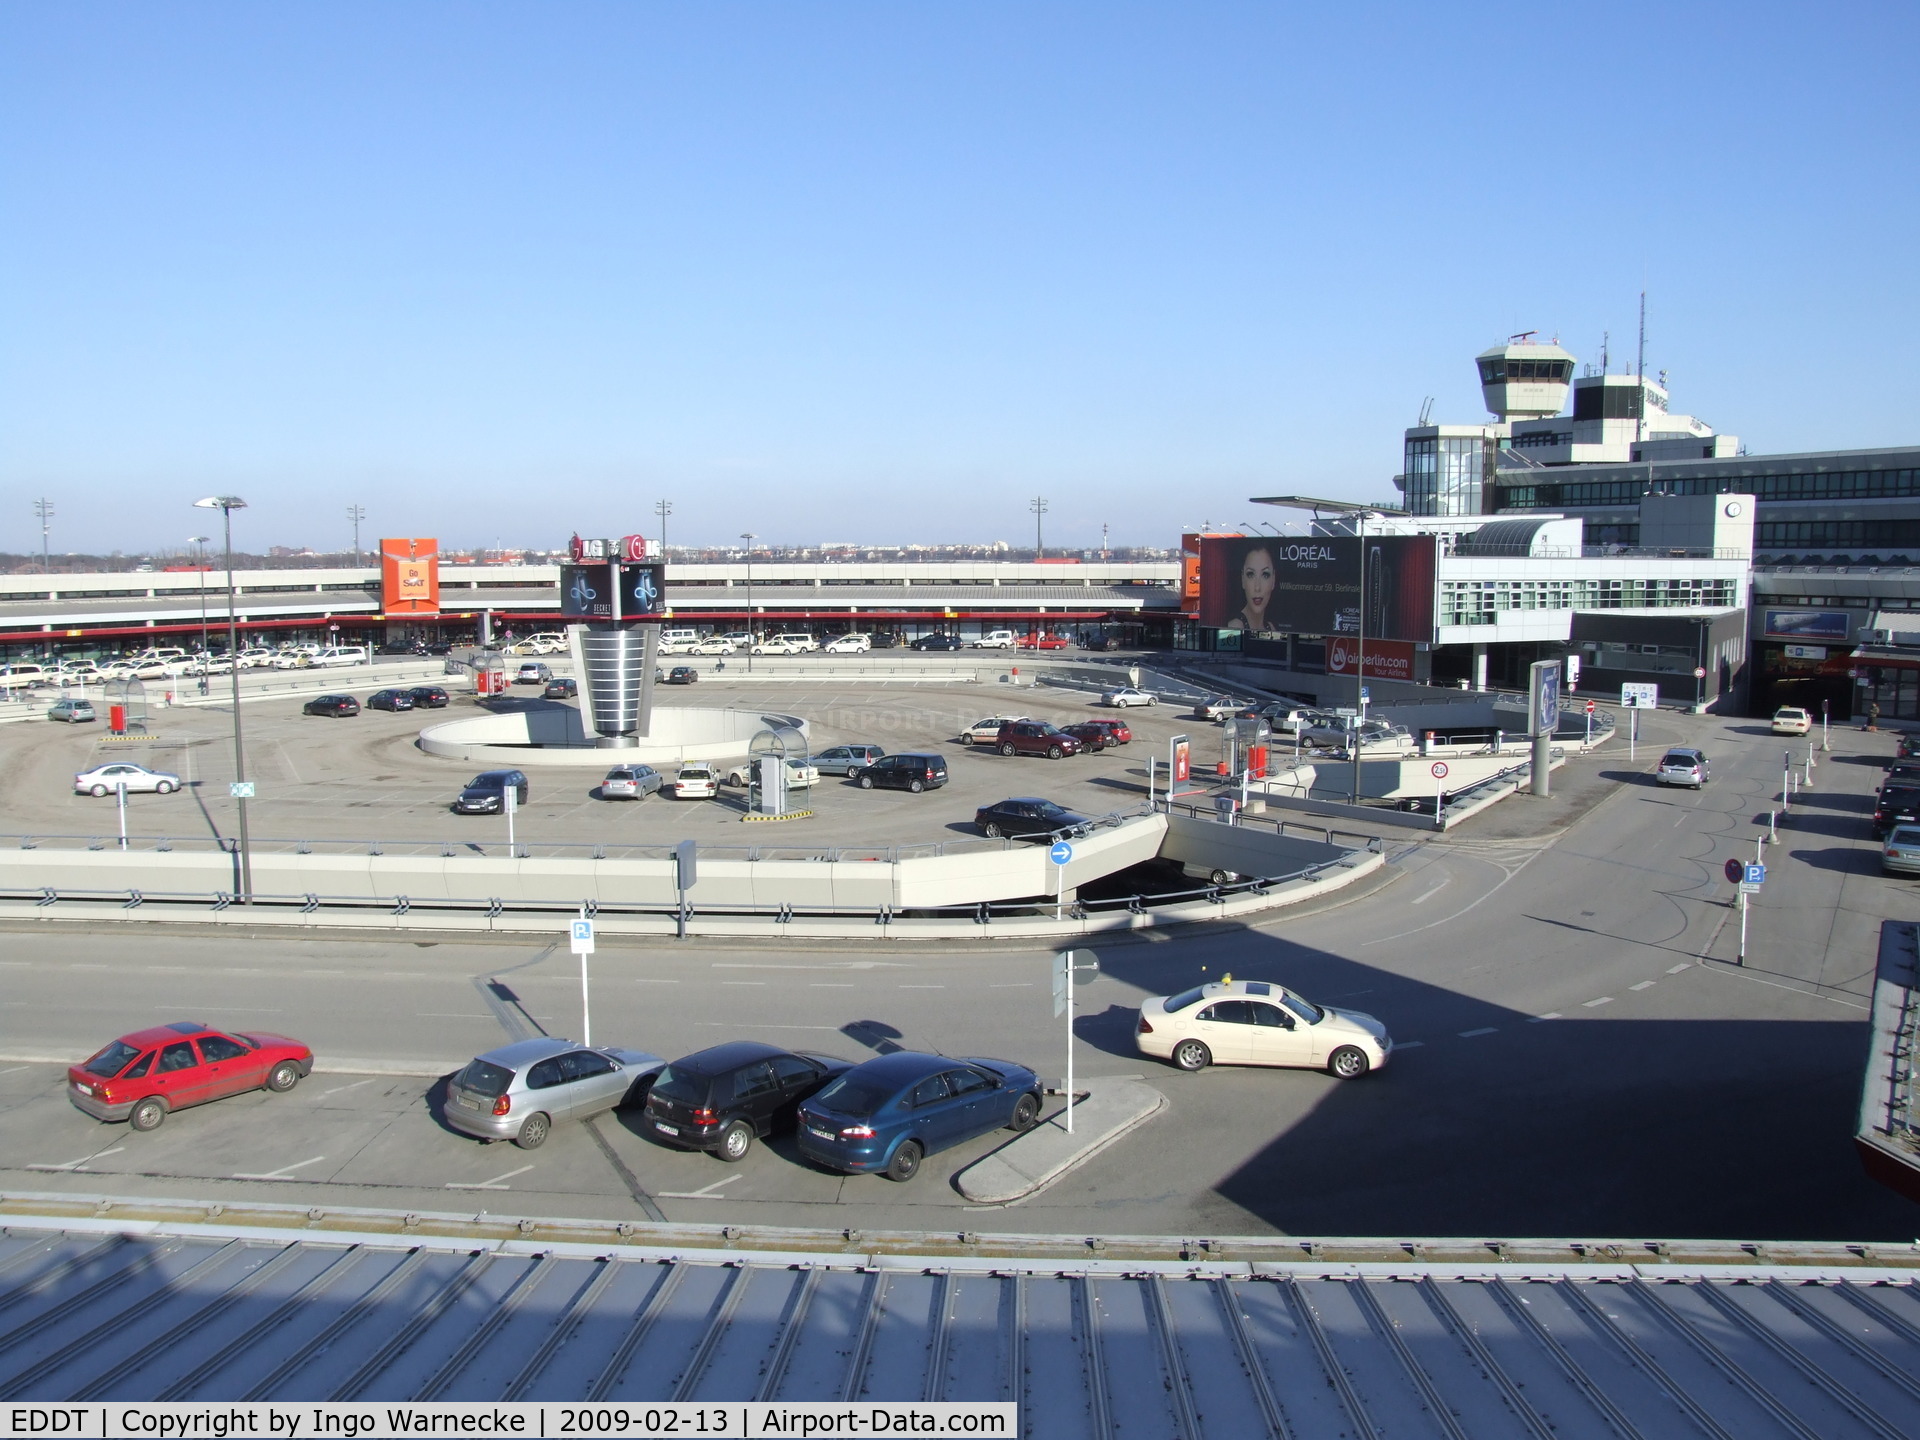 Tegel International Airport (closing in 2011), Berlin Germany (EDDT) - Berlin Tegel, looking inside the hexagonal terminal